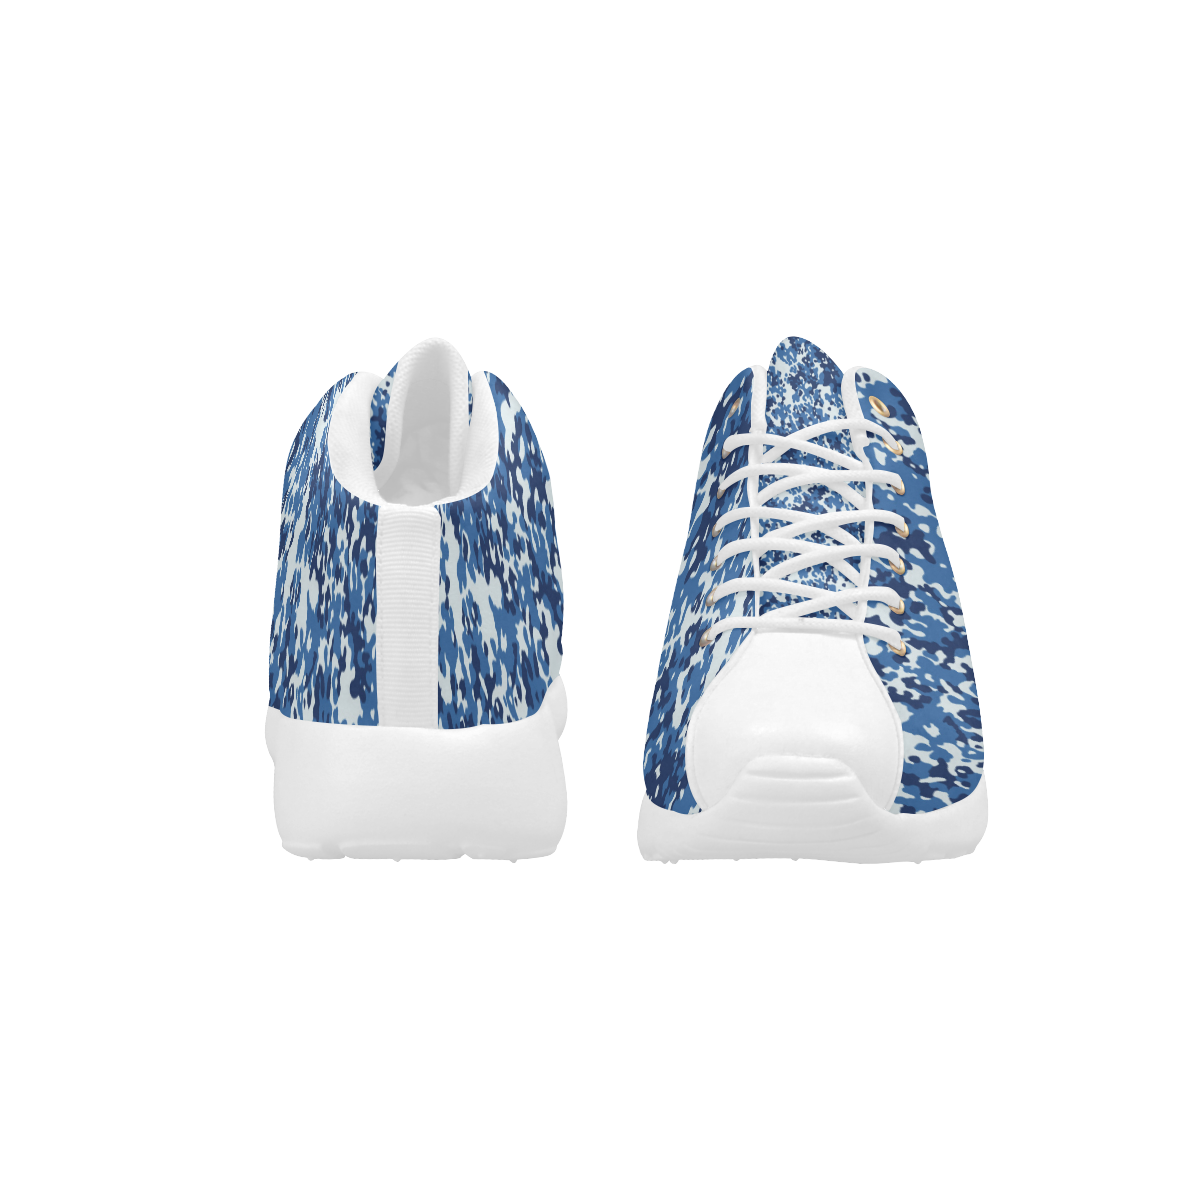 Digital Blue Camouflage Men's Basketball Training Shoes (Model 47502)